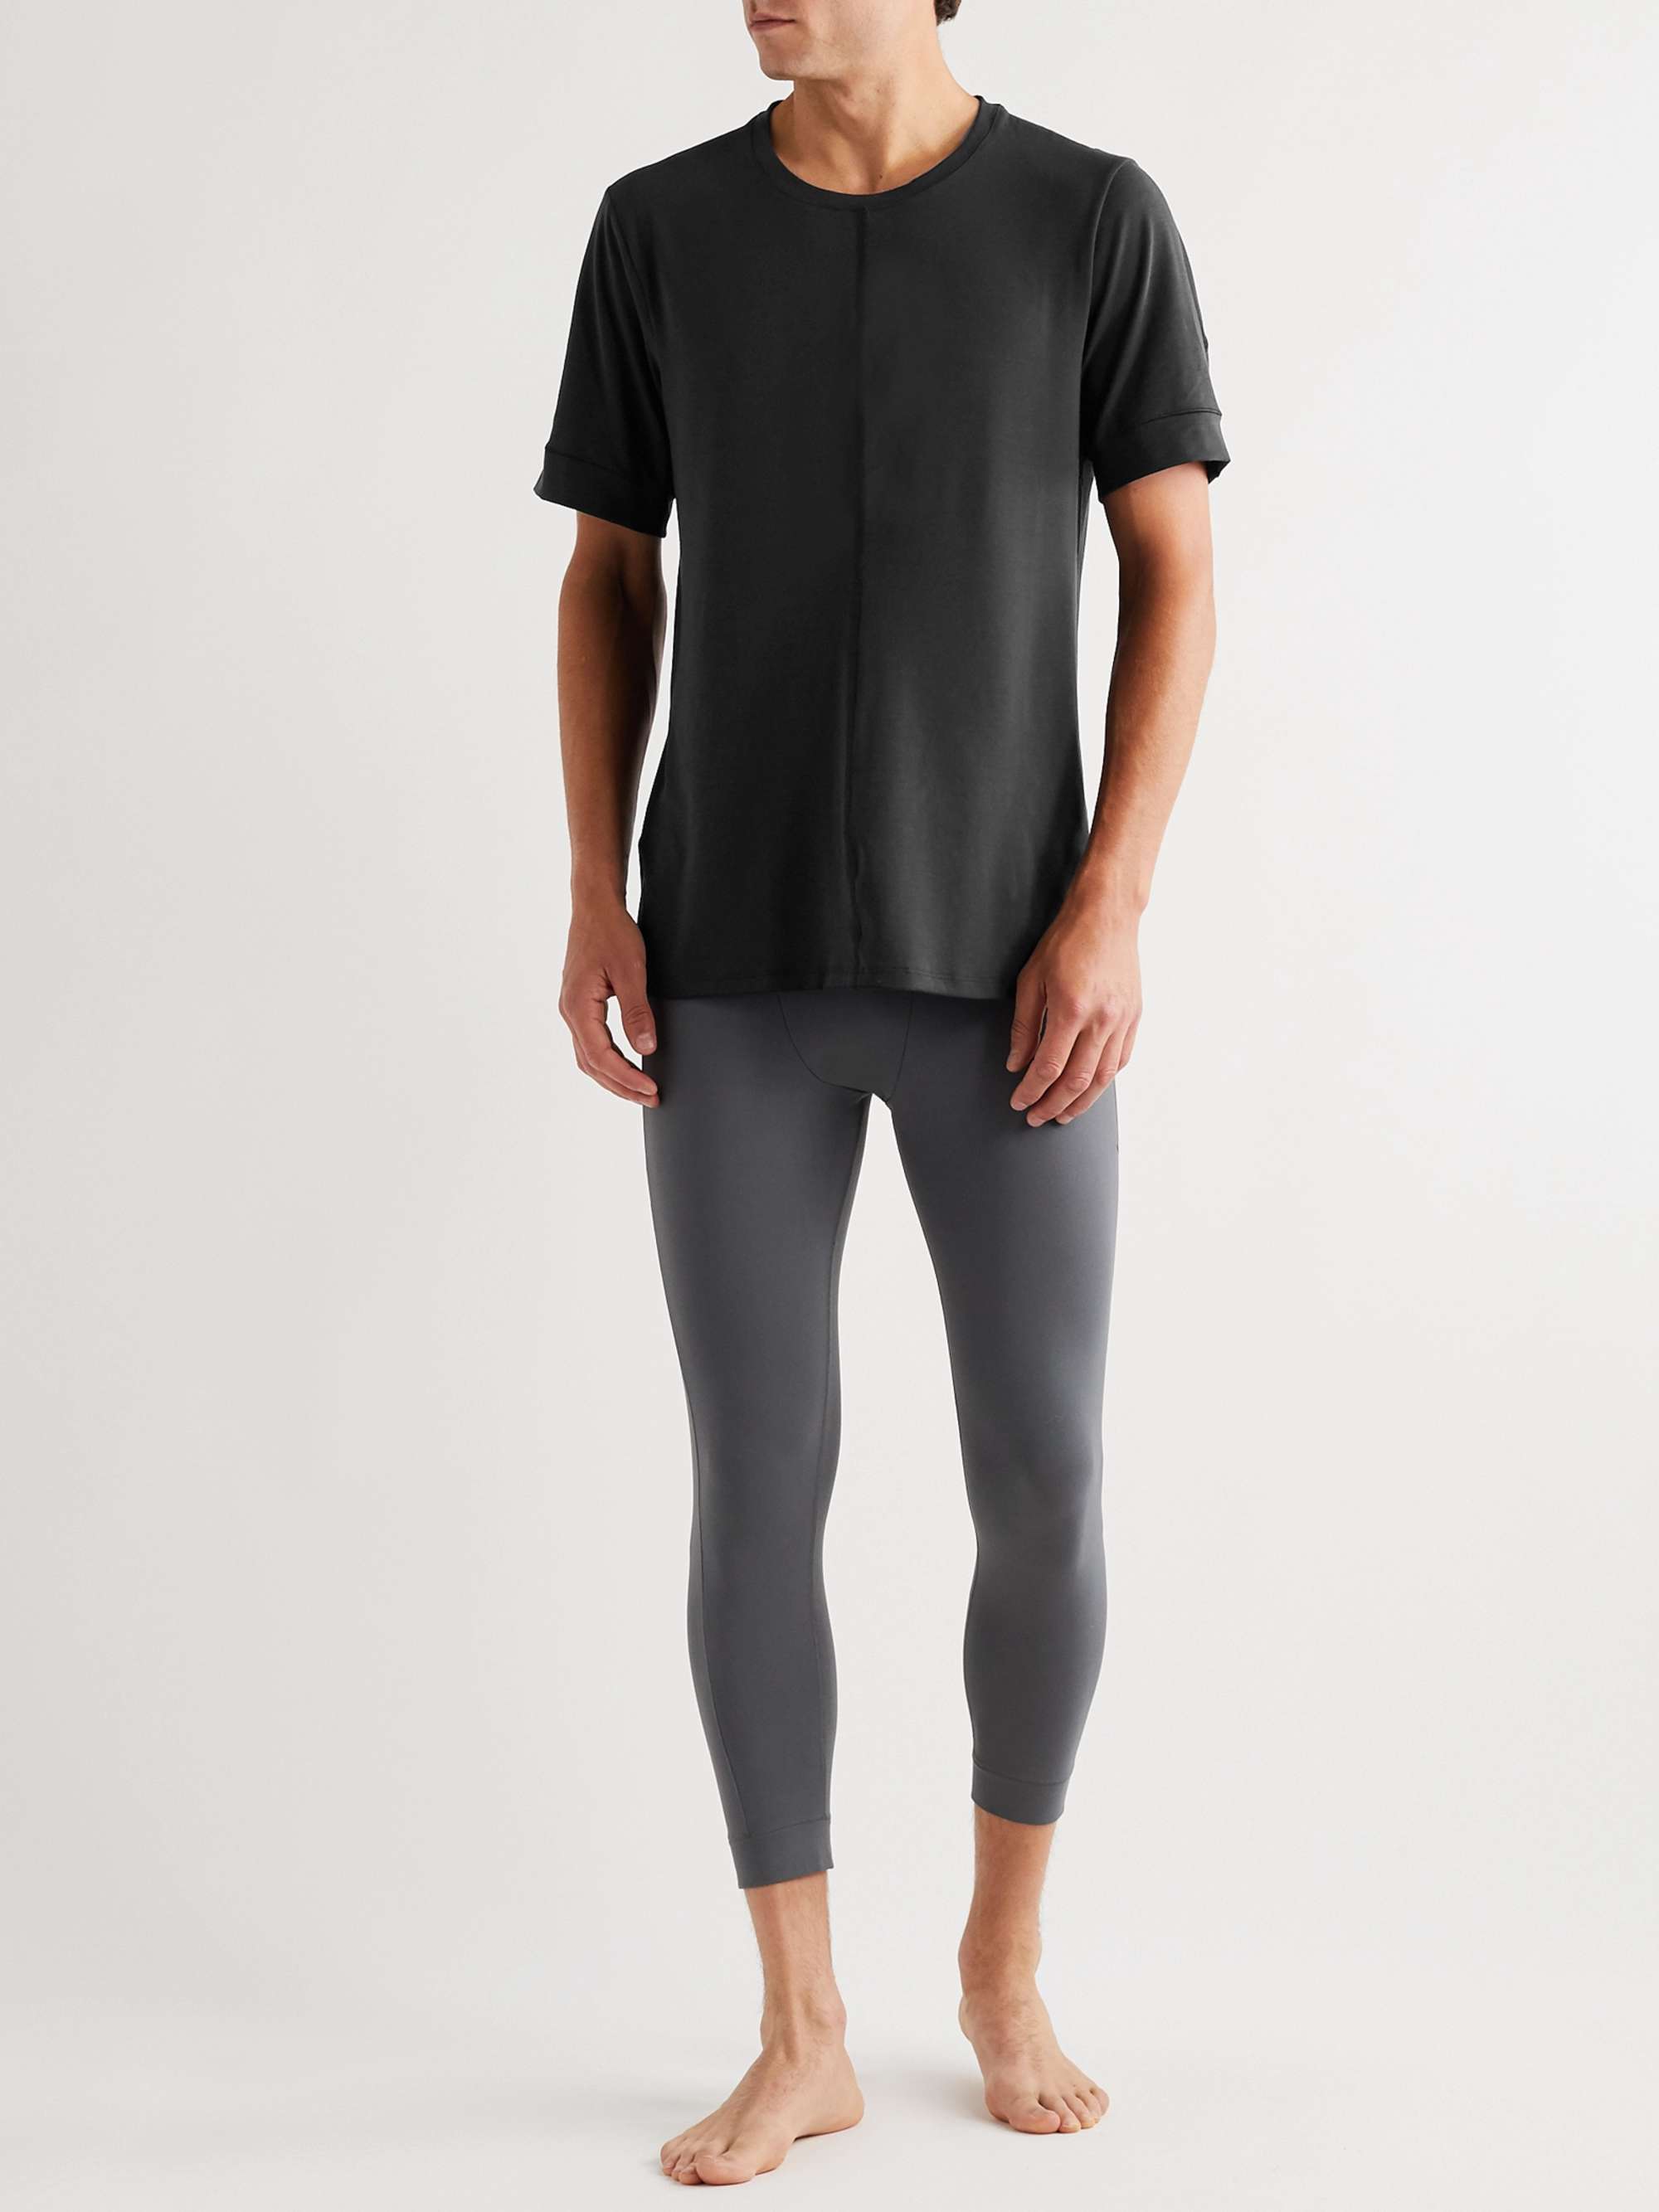 NIKE TRAINING Slim-Fit Dri-FIT Yoga T-Shirt